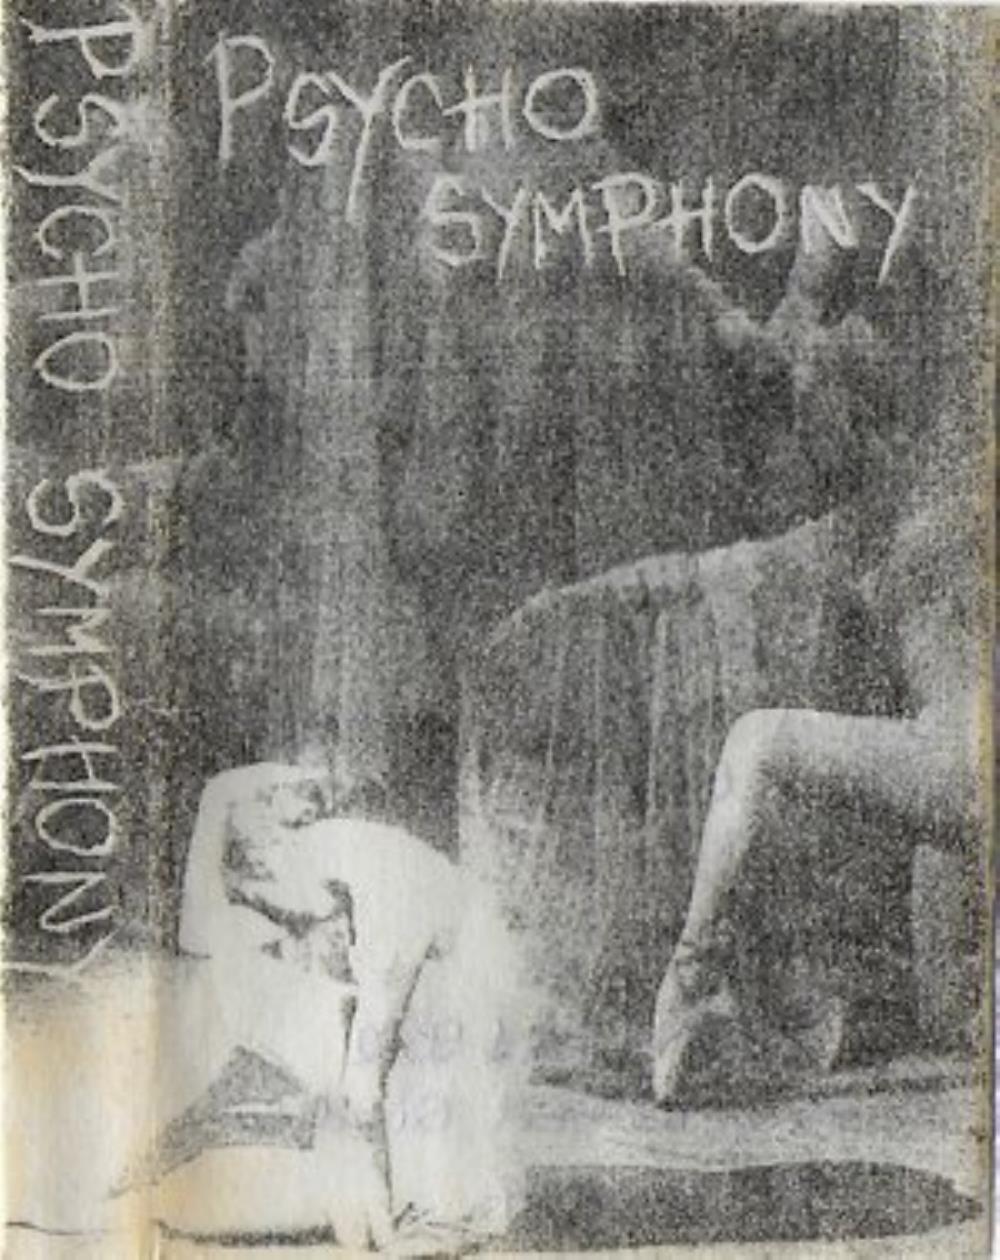 Psycho Symphony Live album cover